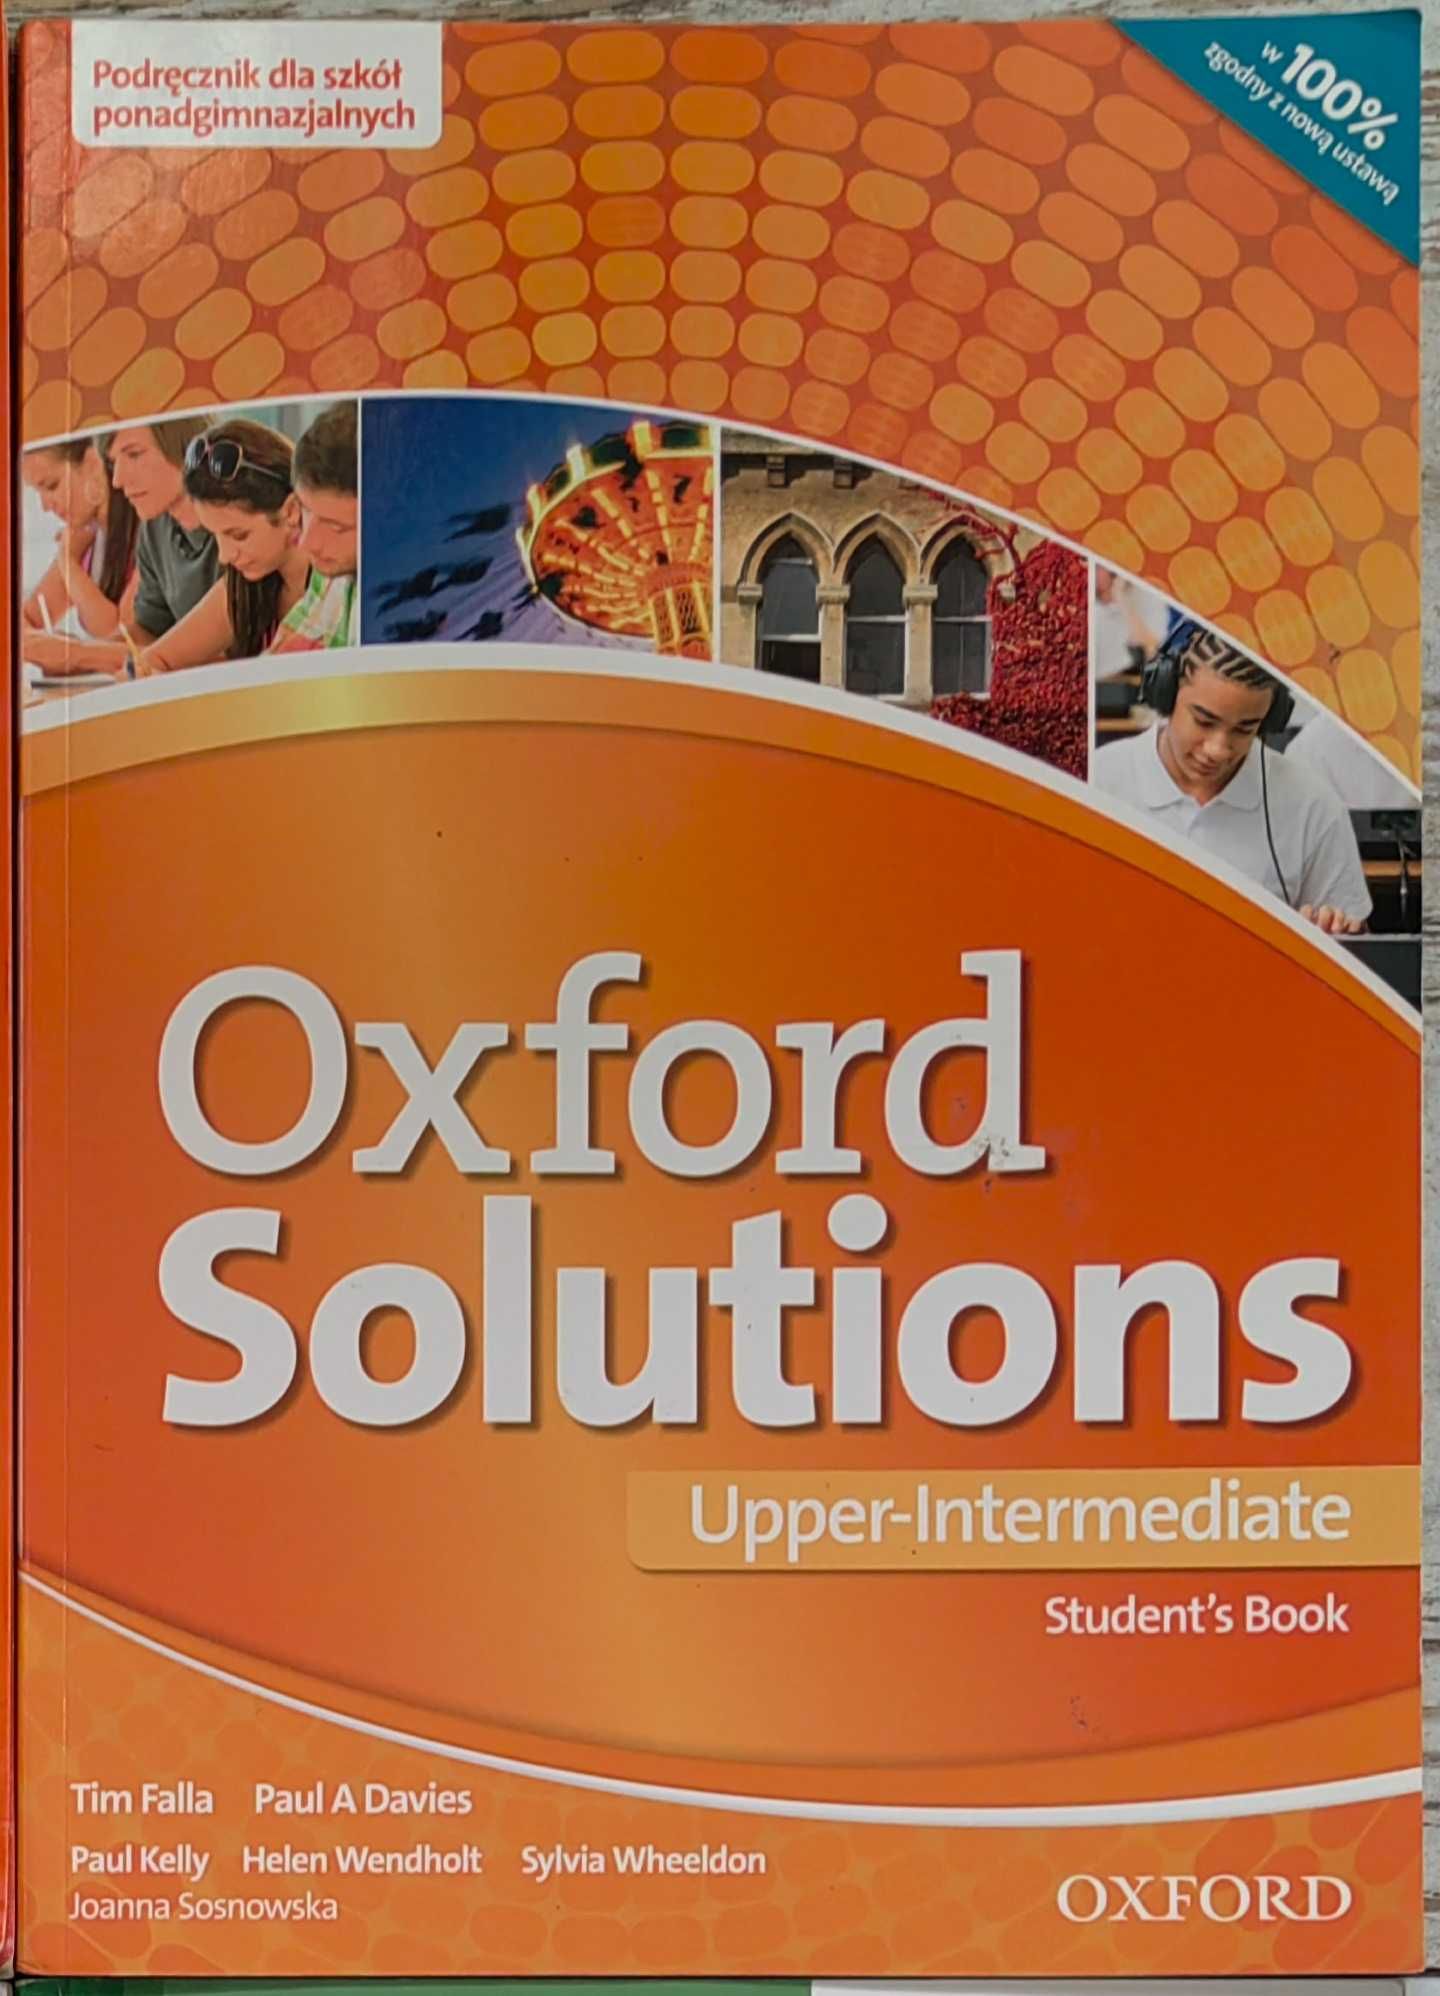 Oxford Solutions Upper-Intermediate Student's Book podręcznik